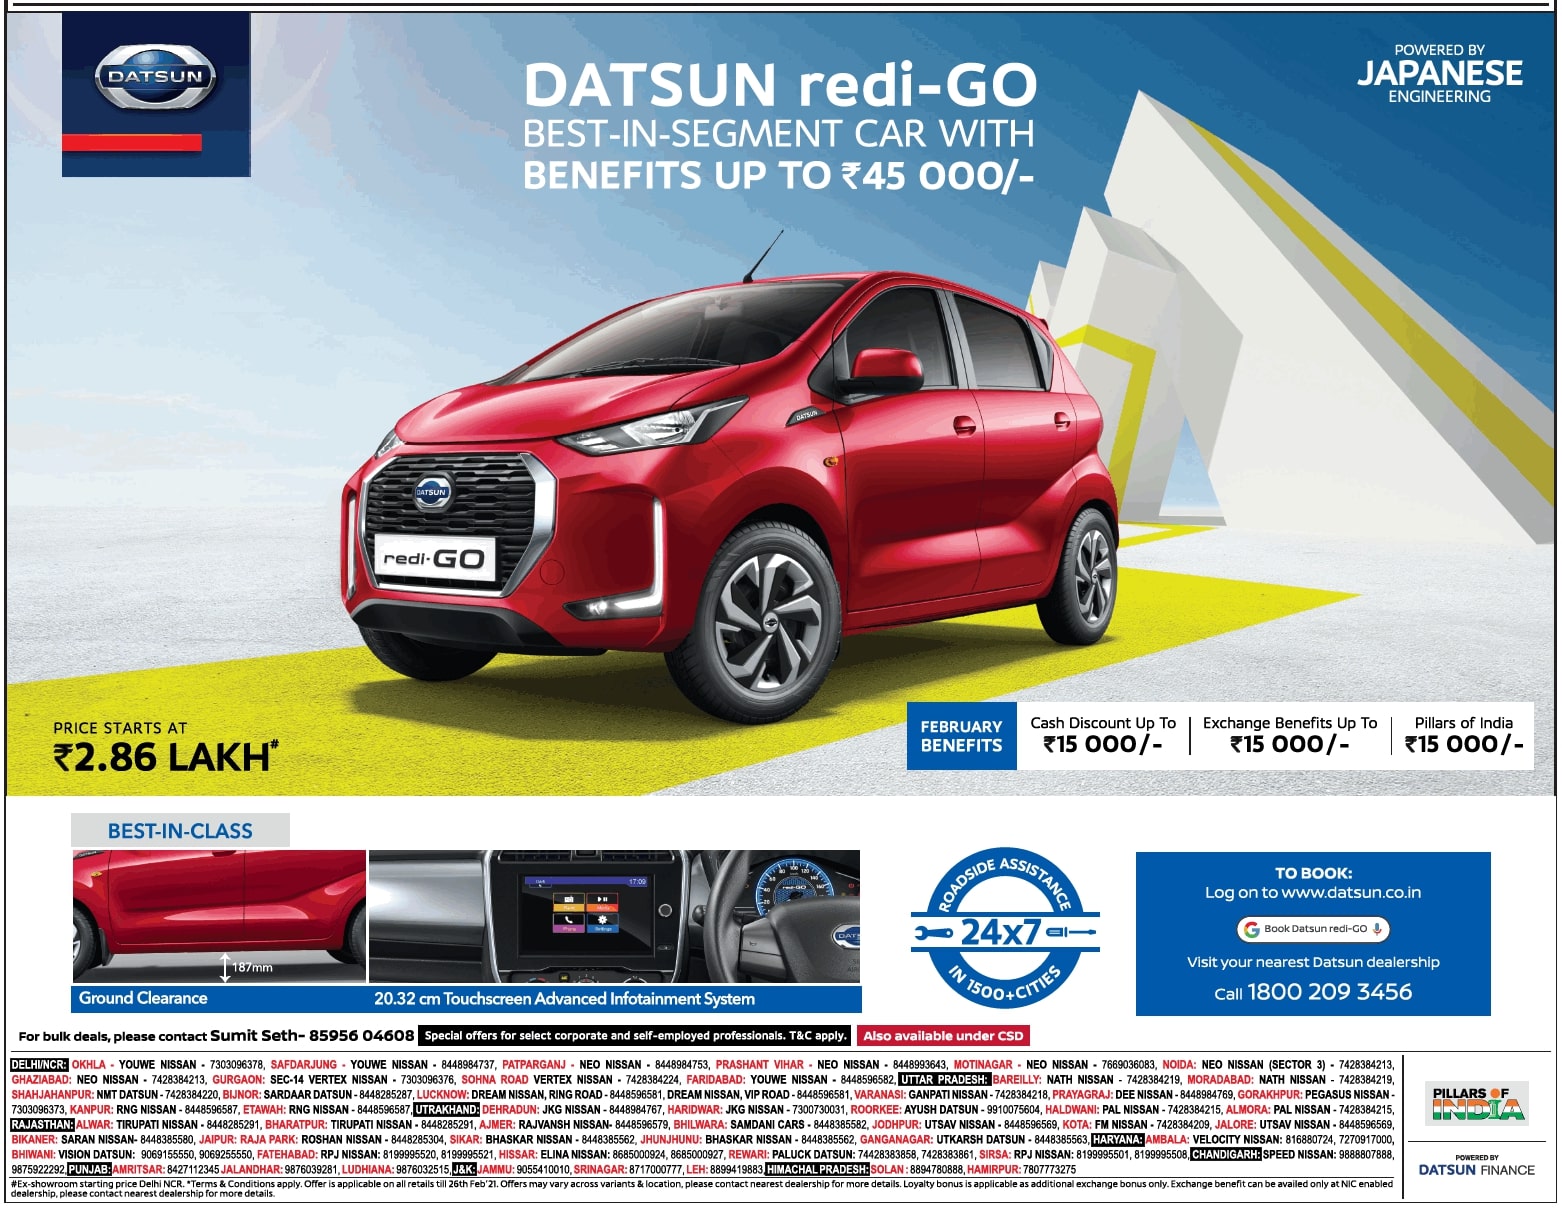 datsun-redi-go-price-starts-at-rupees-2-86-lakh-ad-times-of-india-delhi-17-02-2021